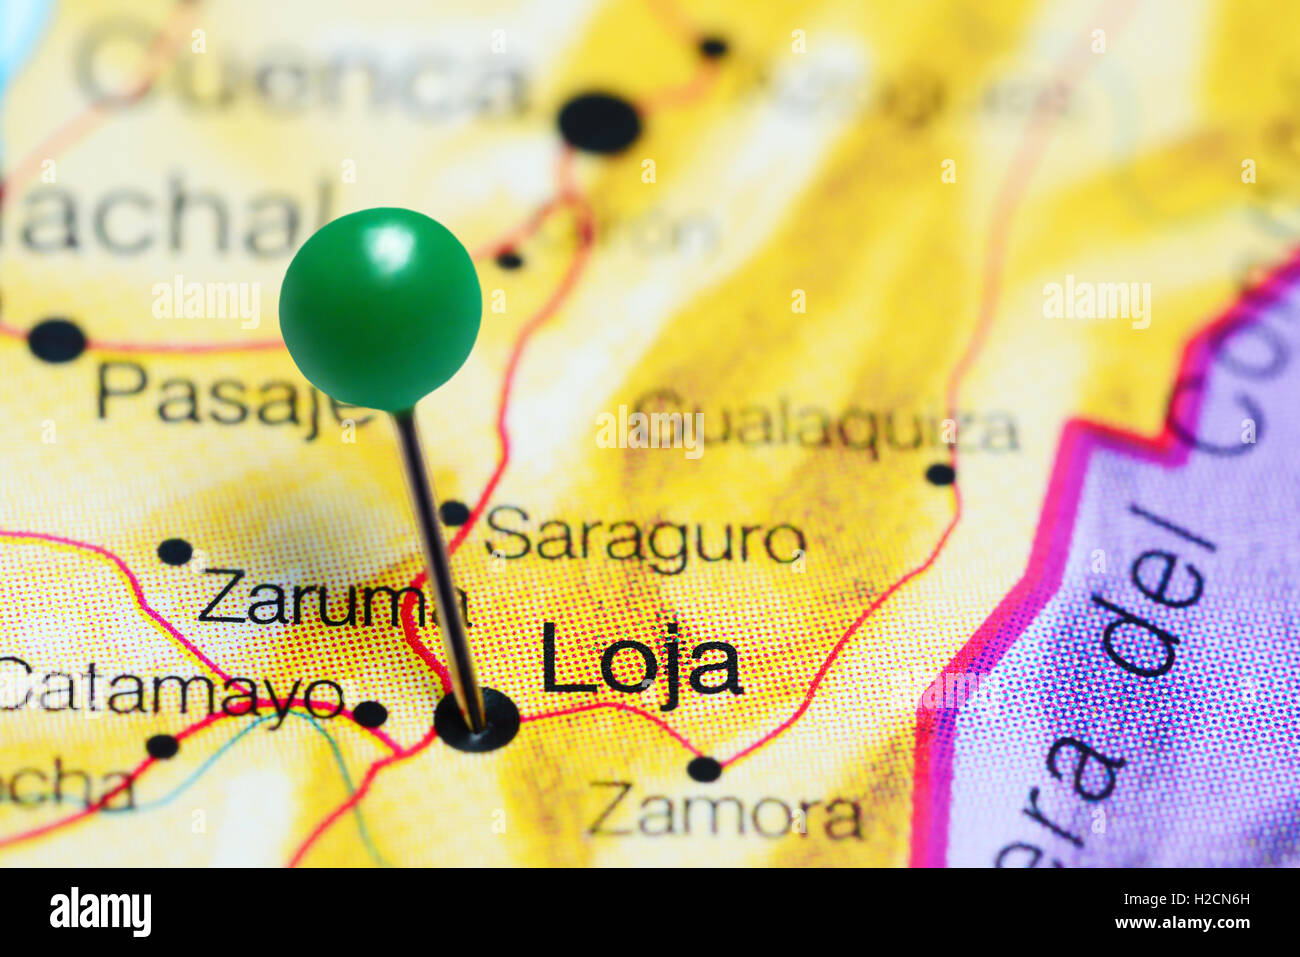 Loja pinned on a map of Ecuador Stock Photo